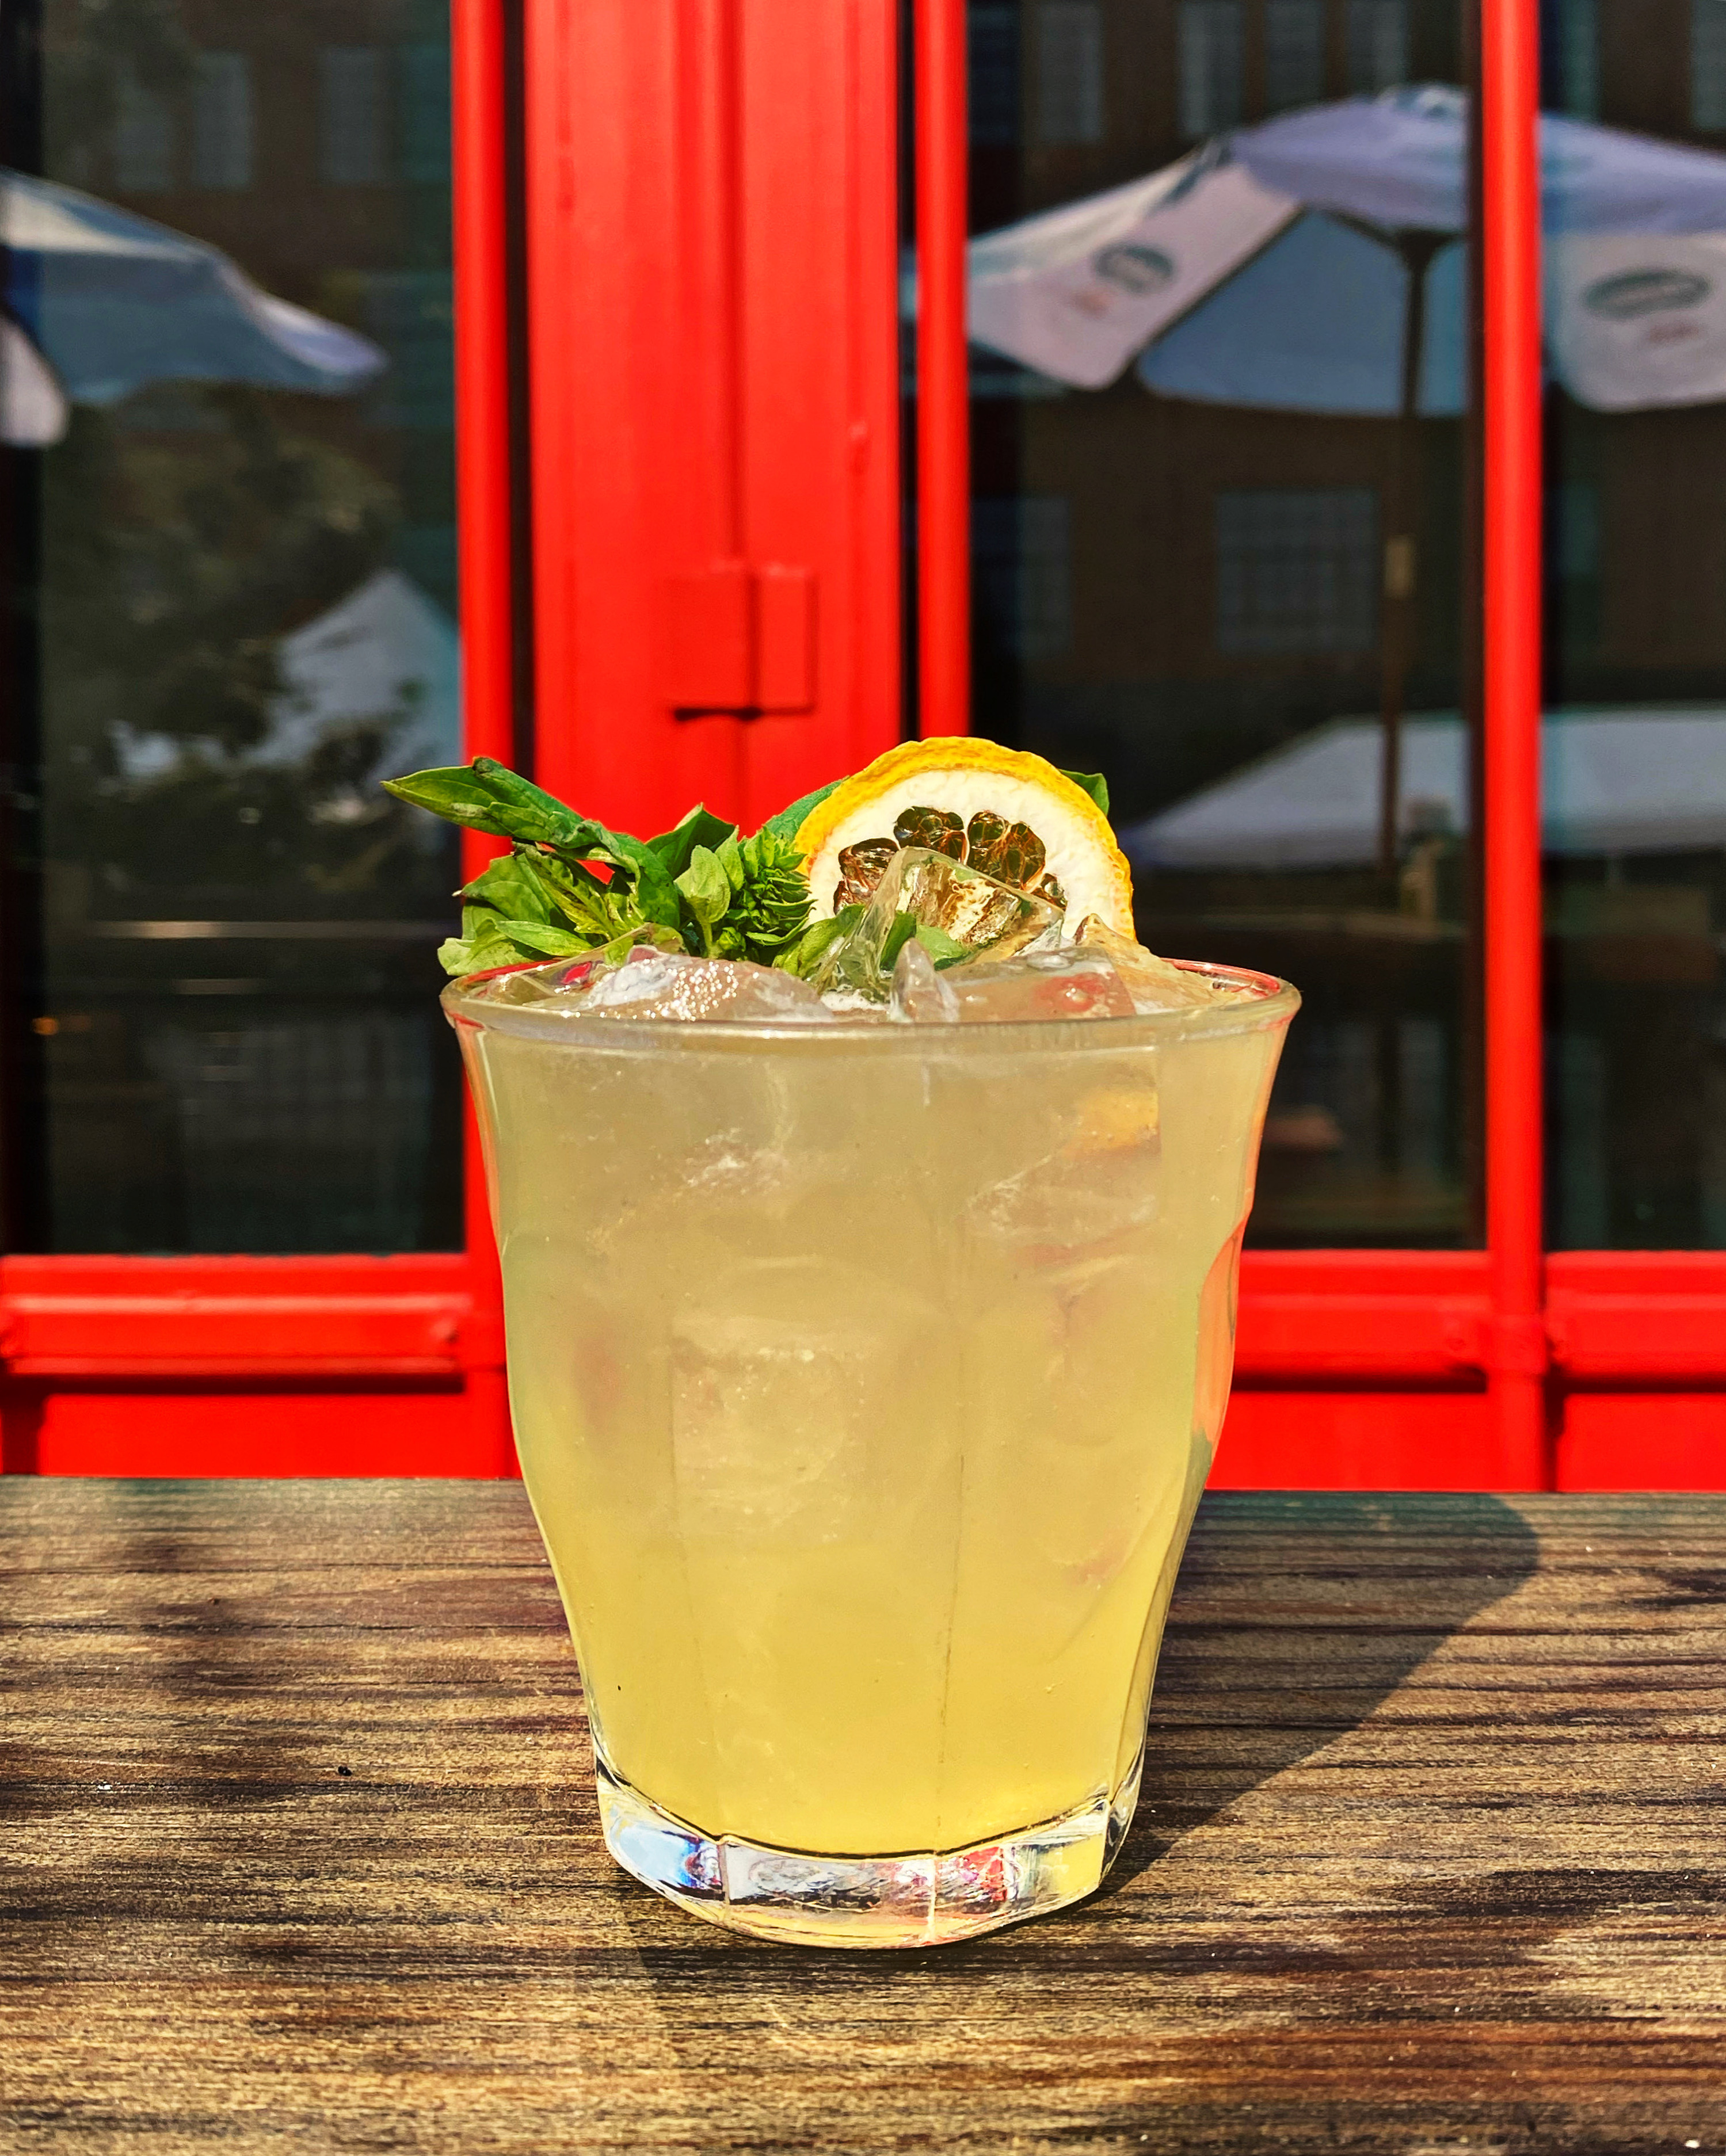 Cocktail with lemon and basil garnish